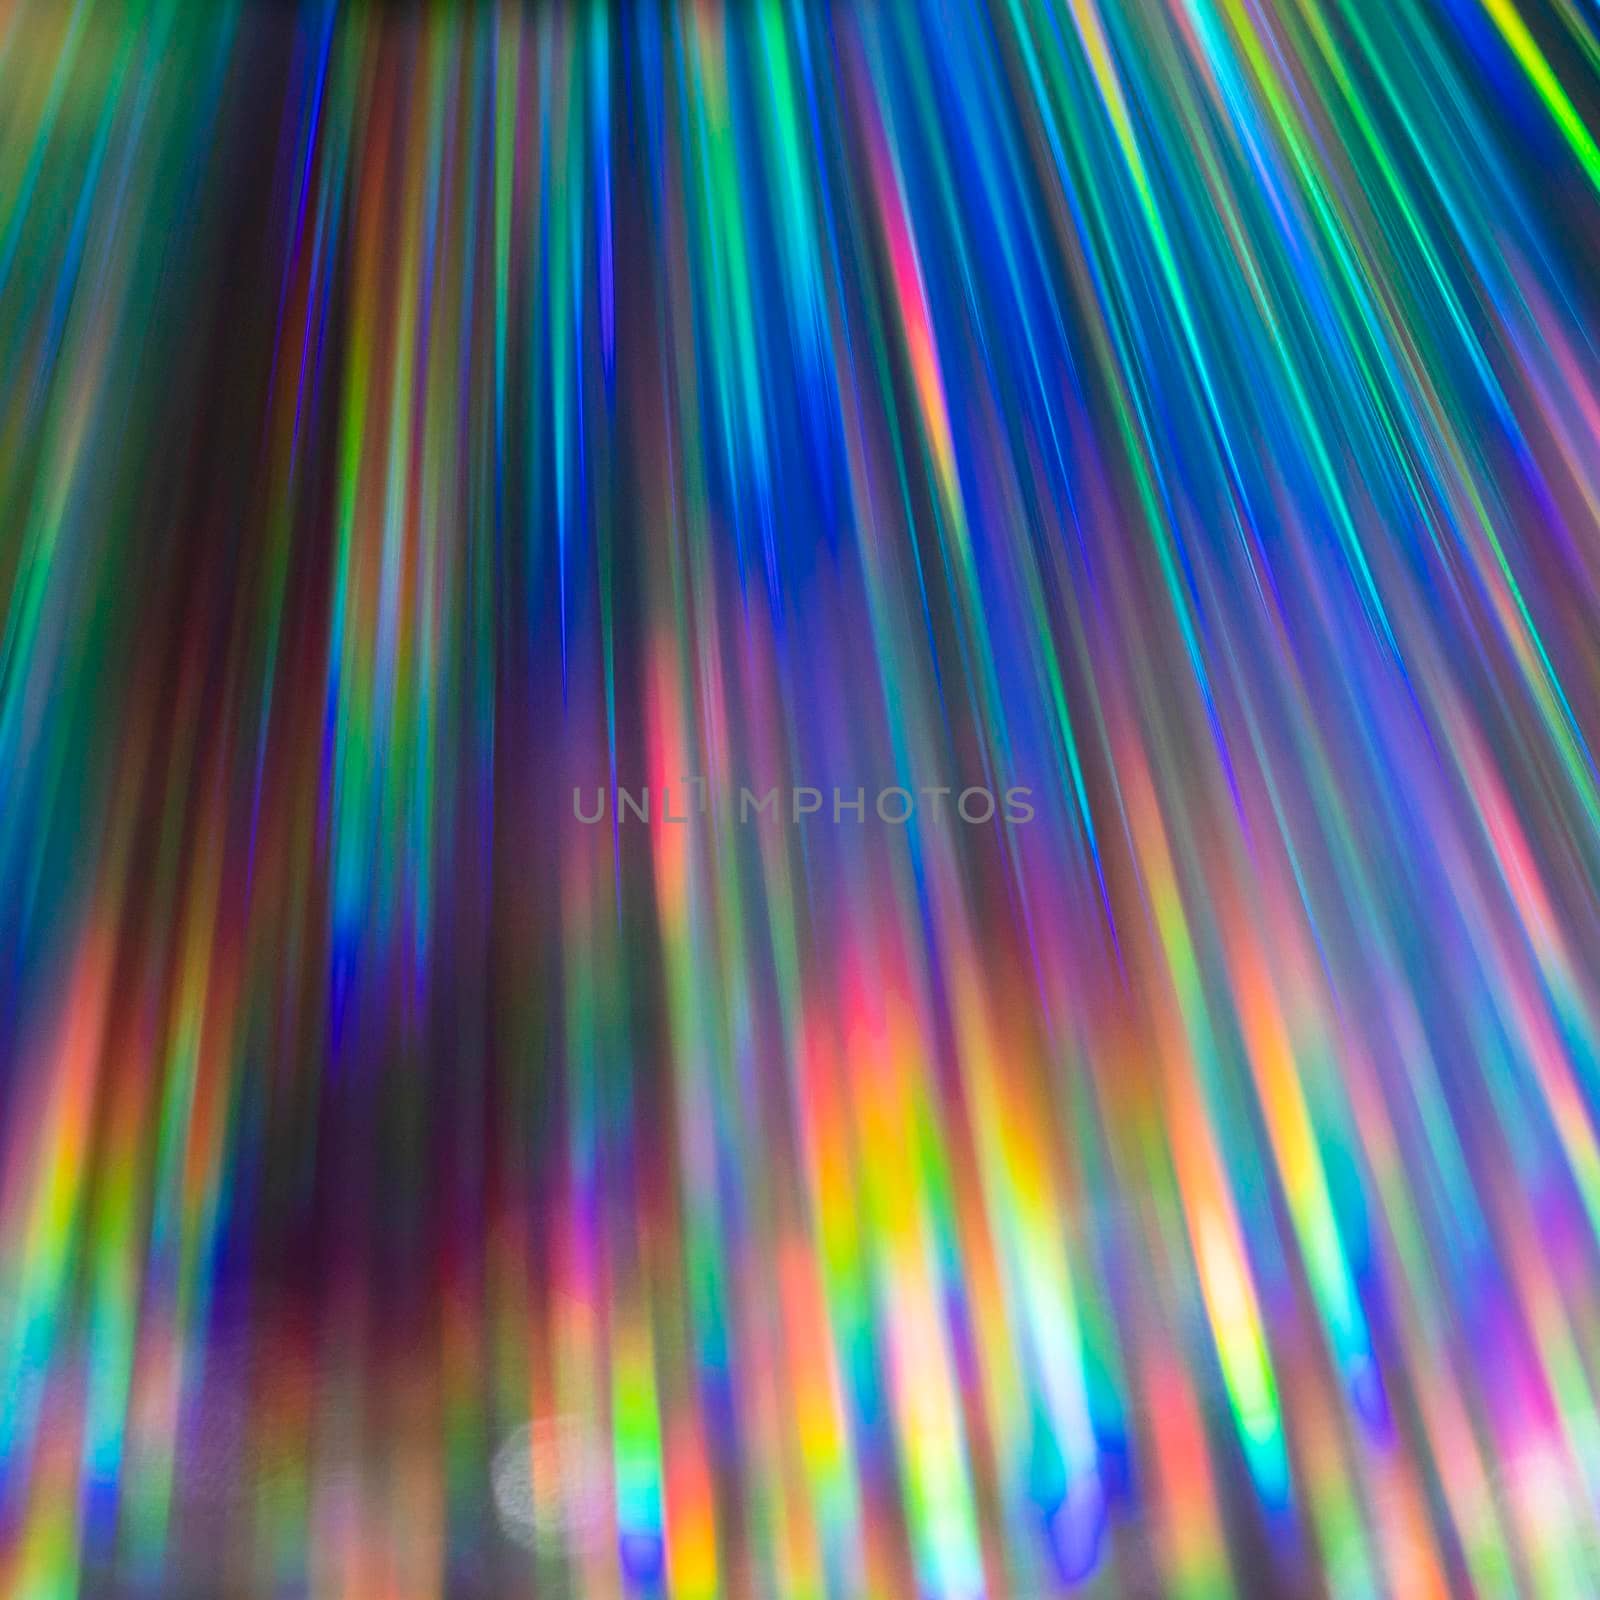 metallic holographic background. High resolution photo